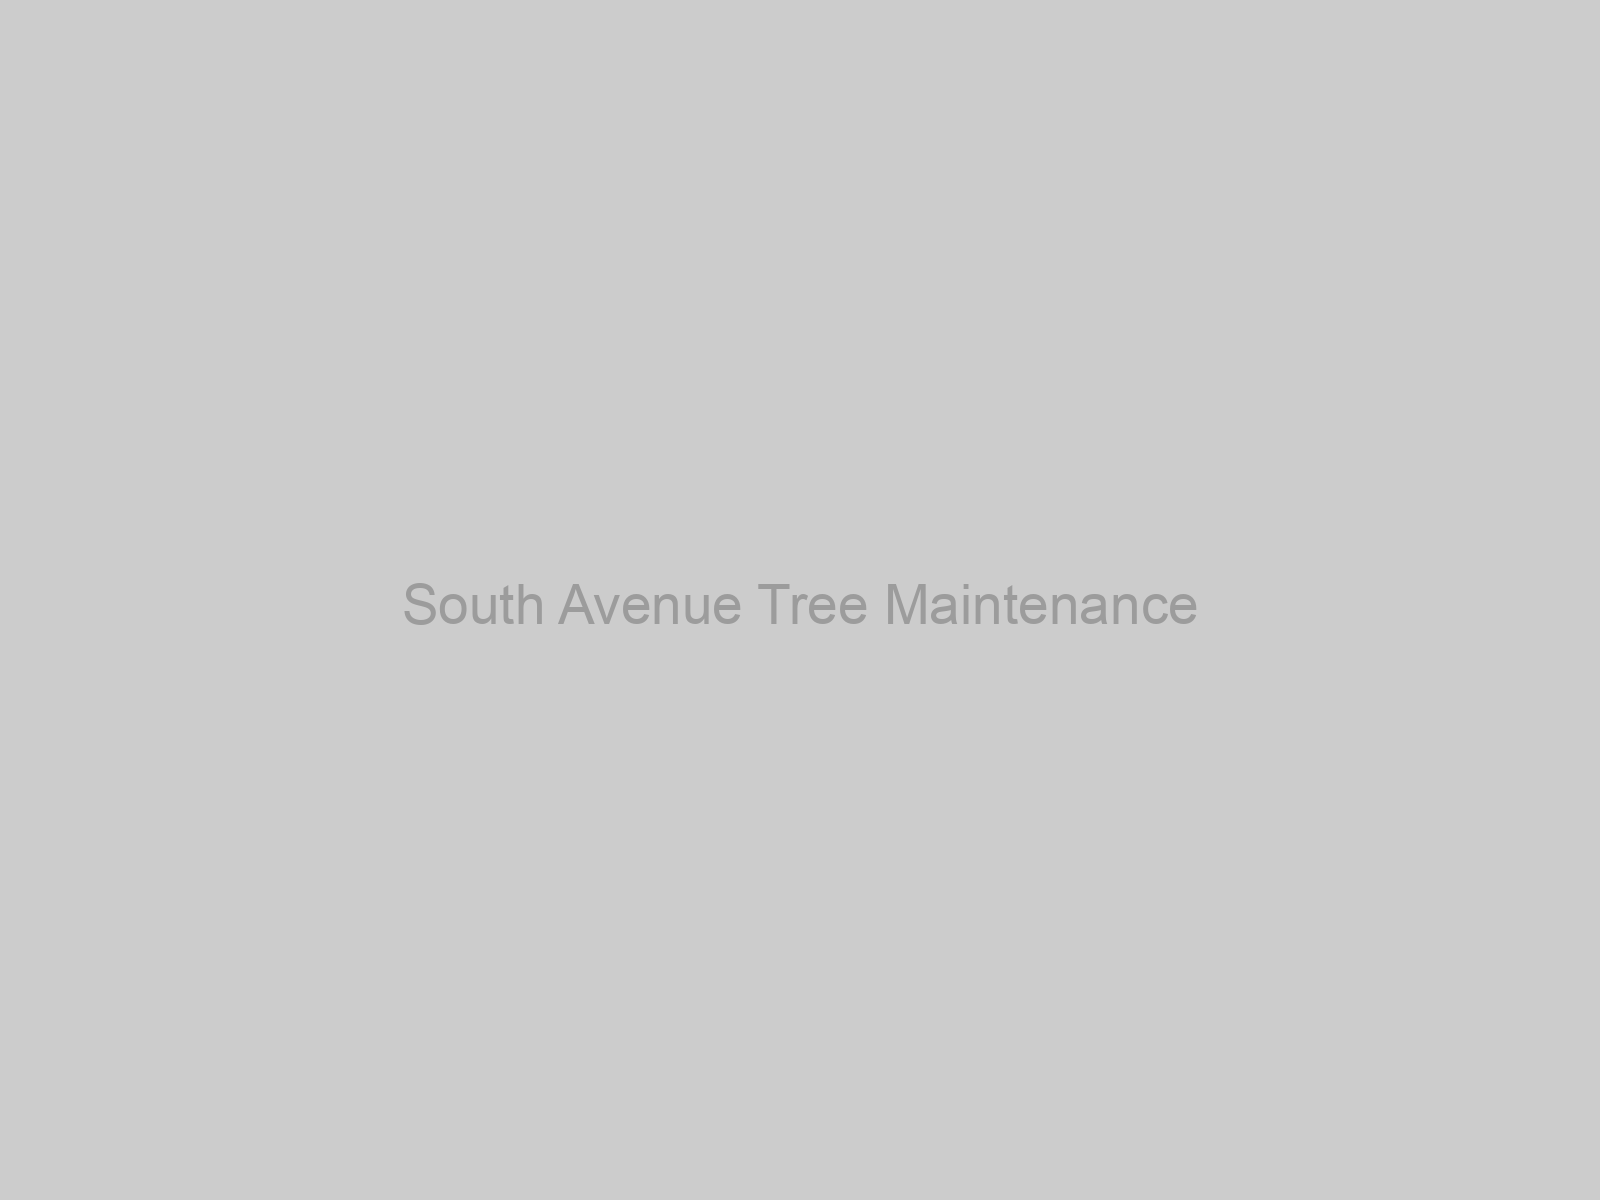 South Avenue Tree Maintenance